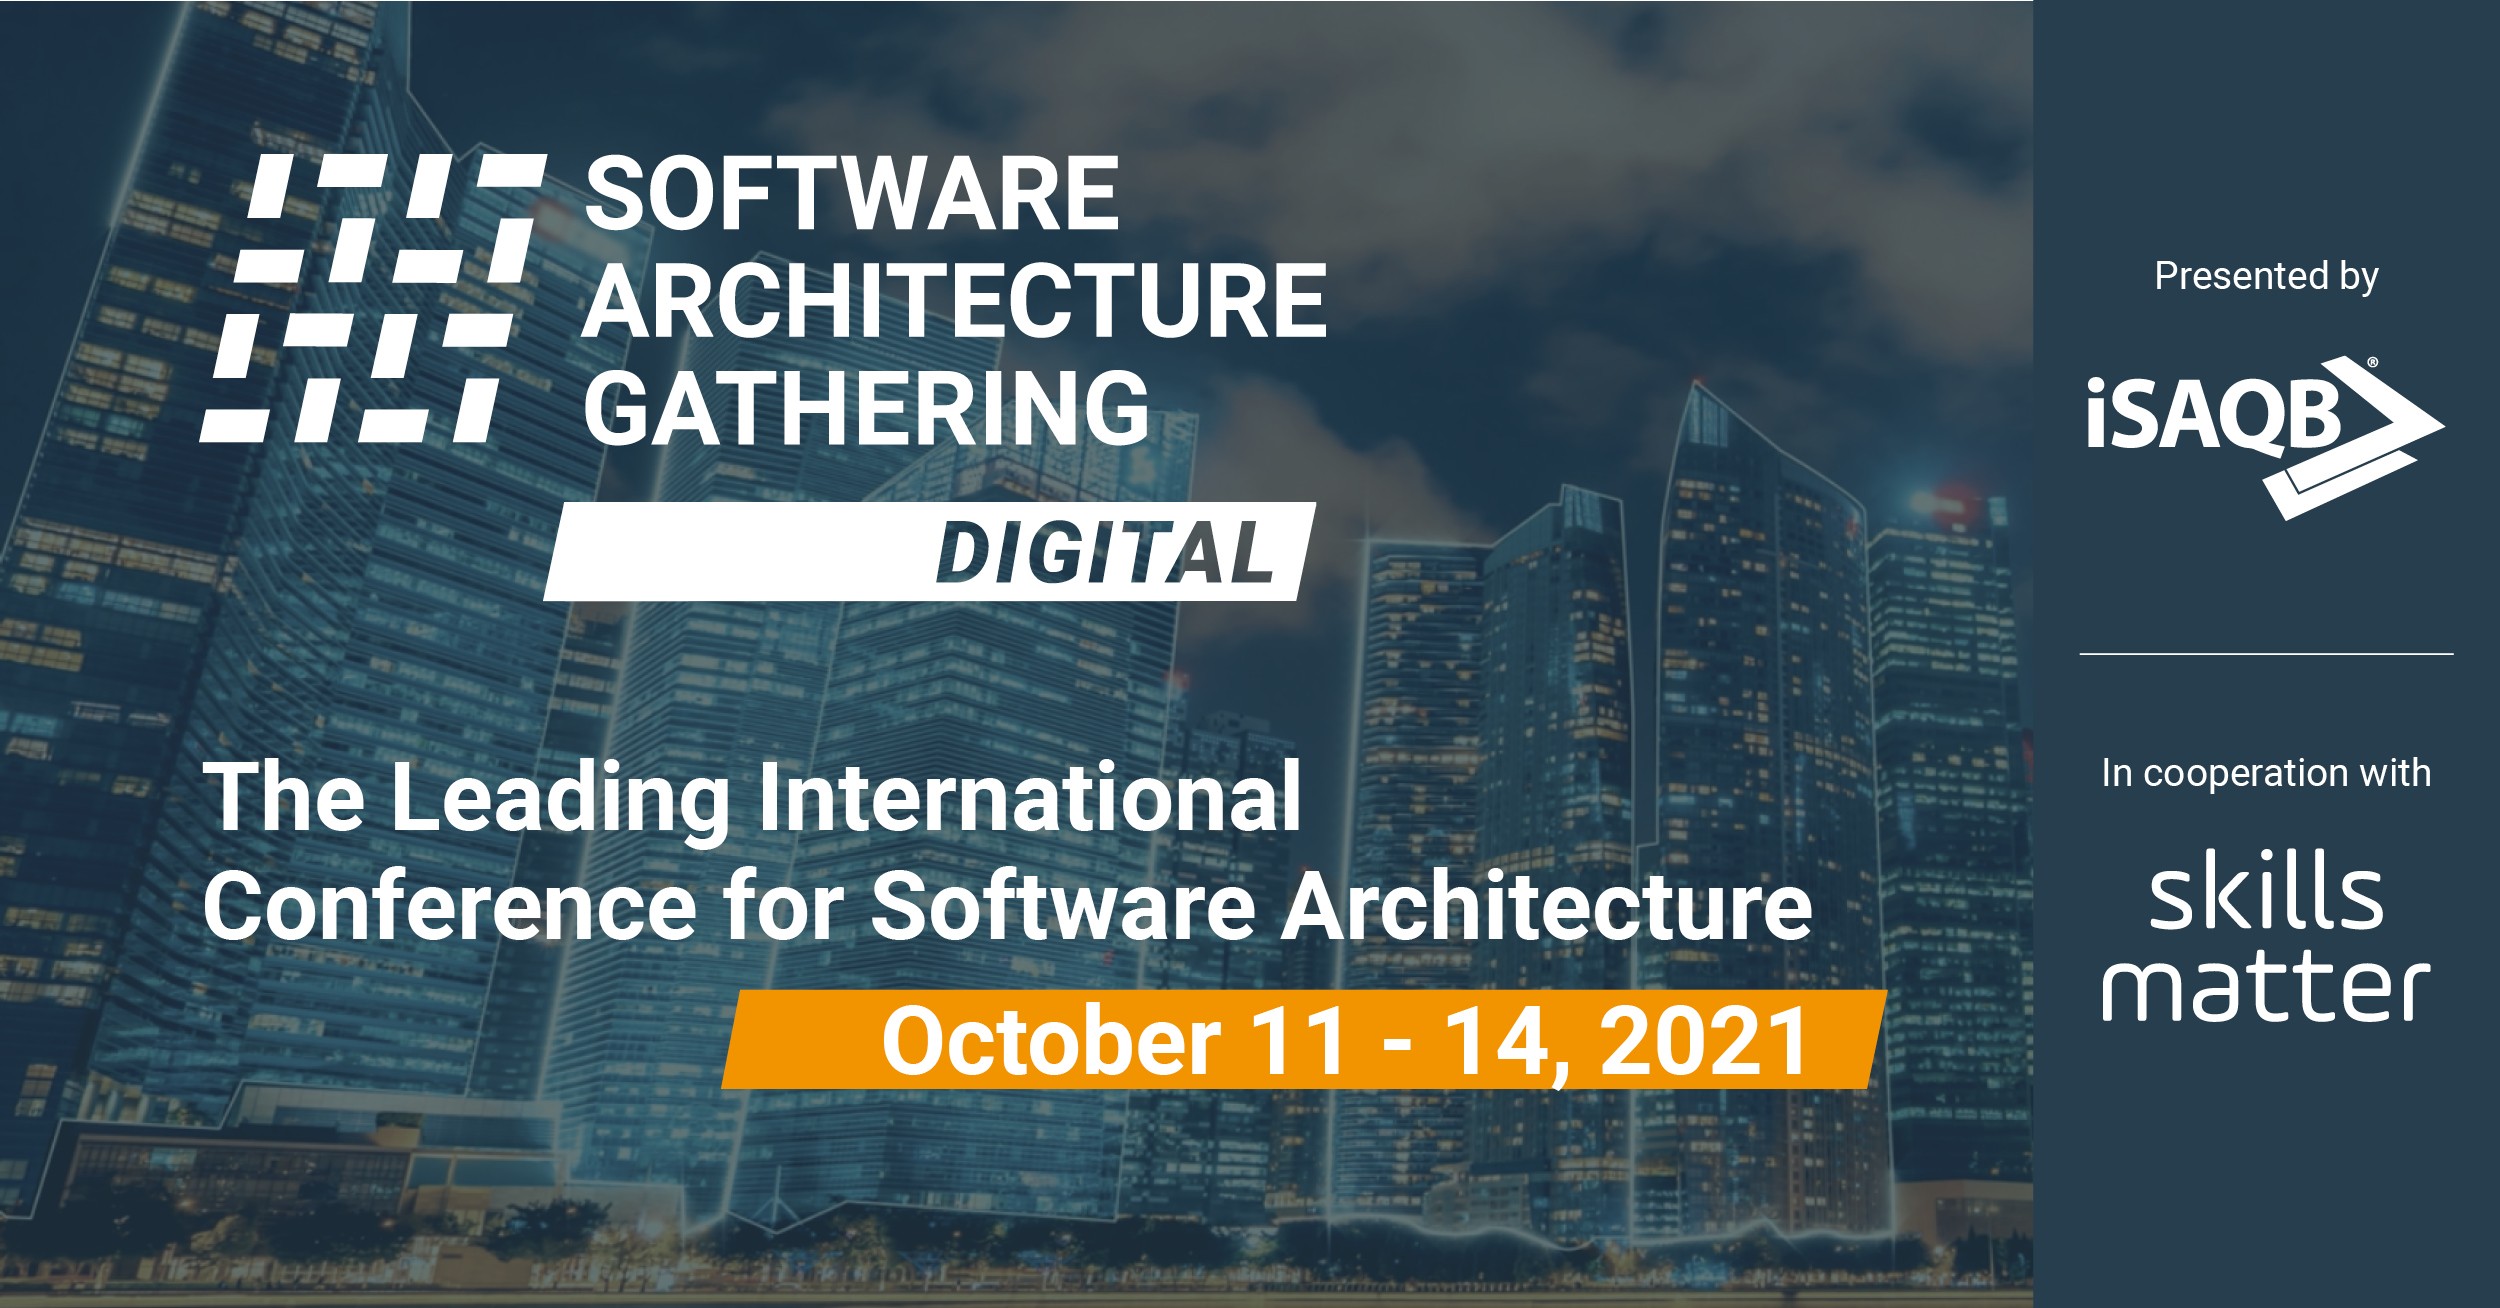 Software Architecture Gathering Digital